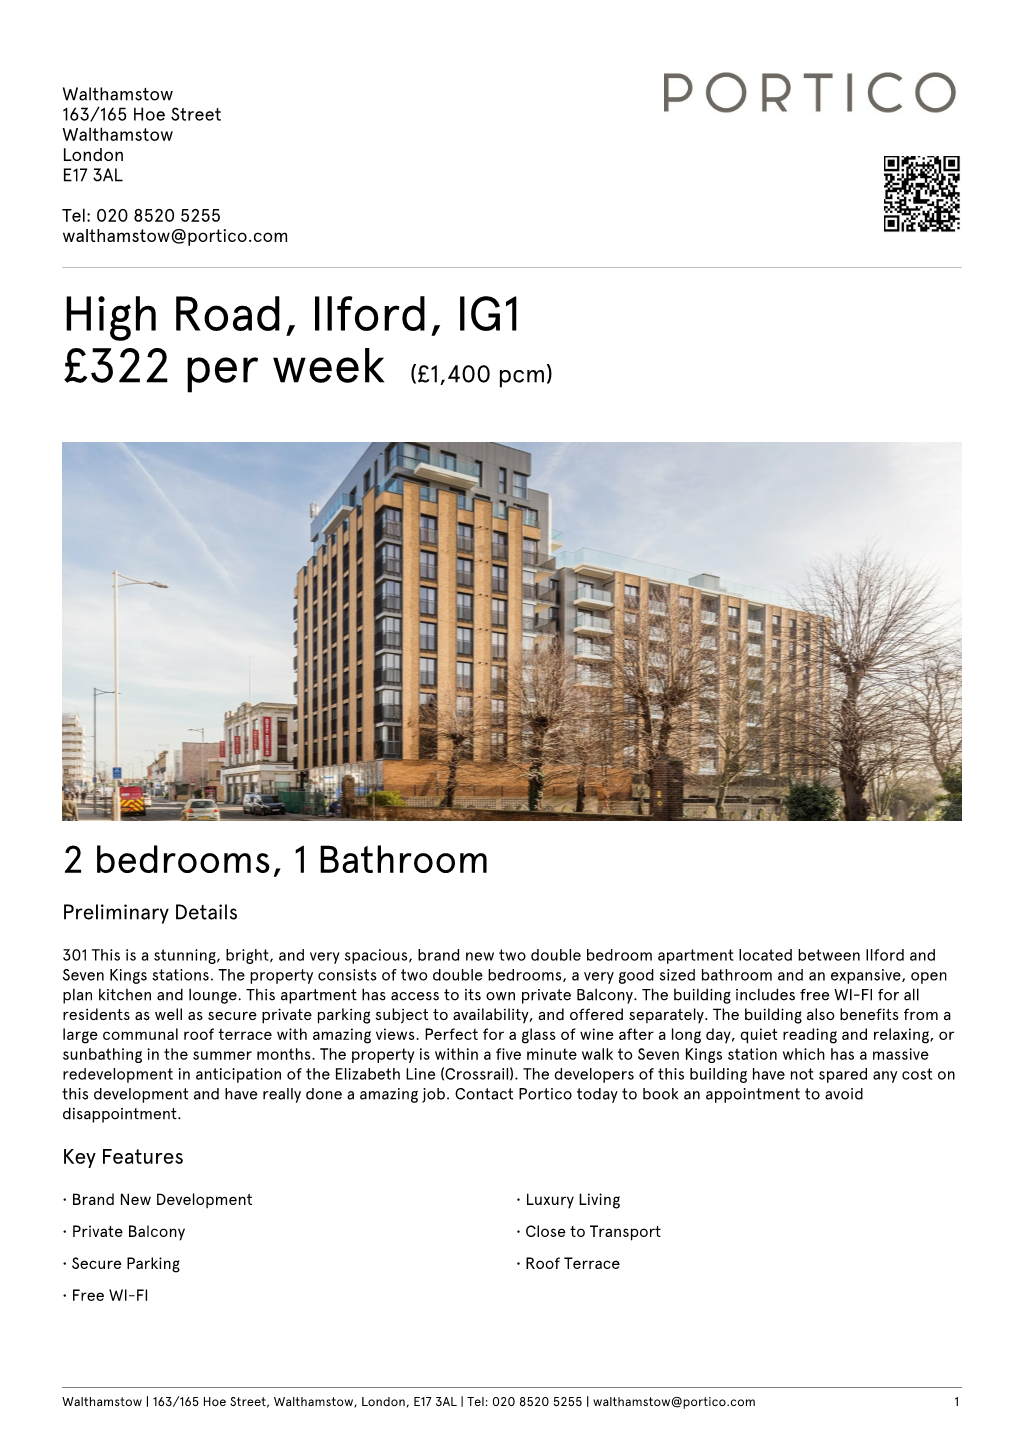 High Road, Ilford, IG1 £322 Per Week